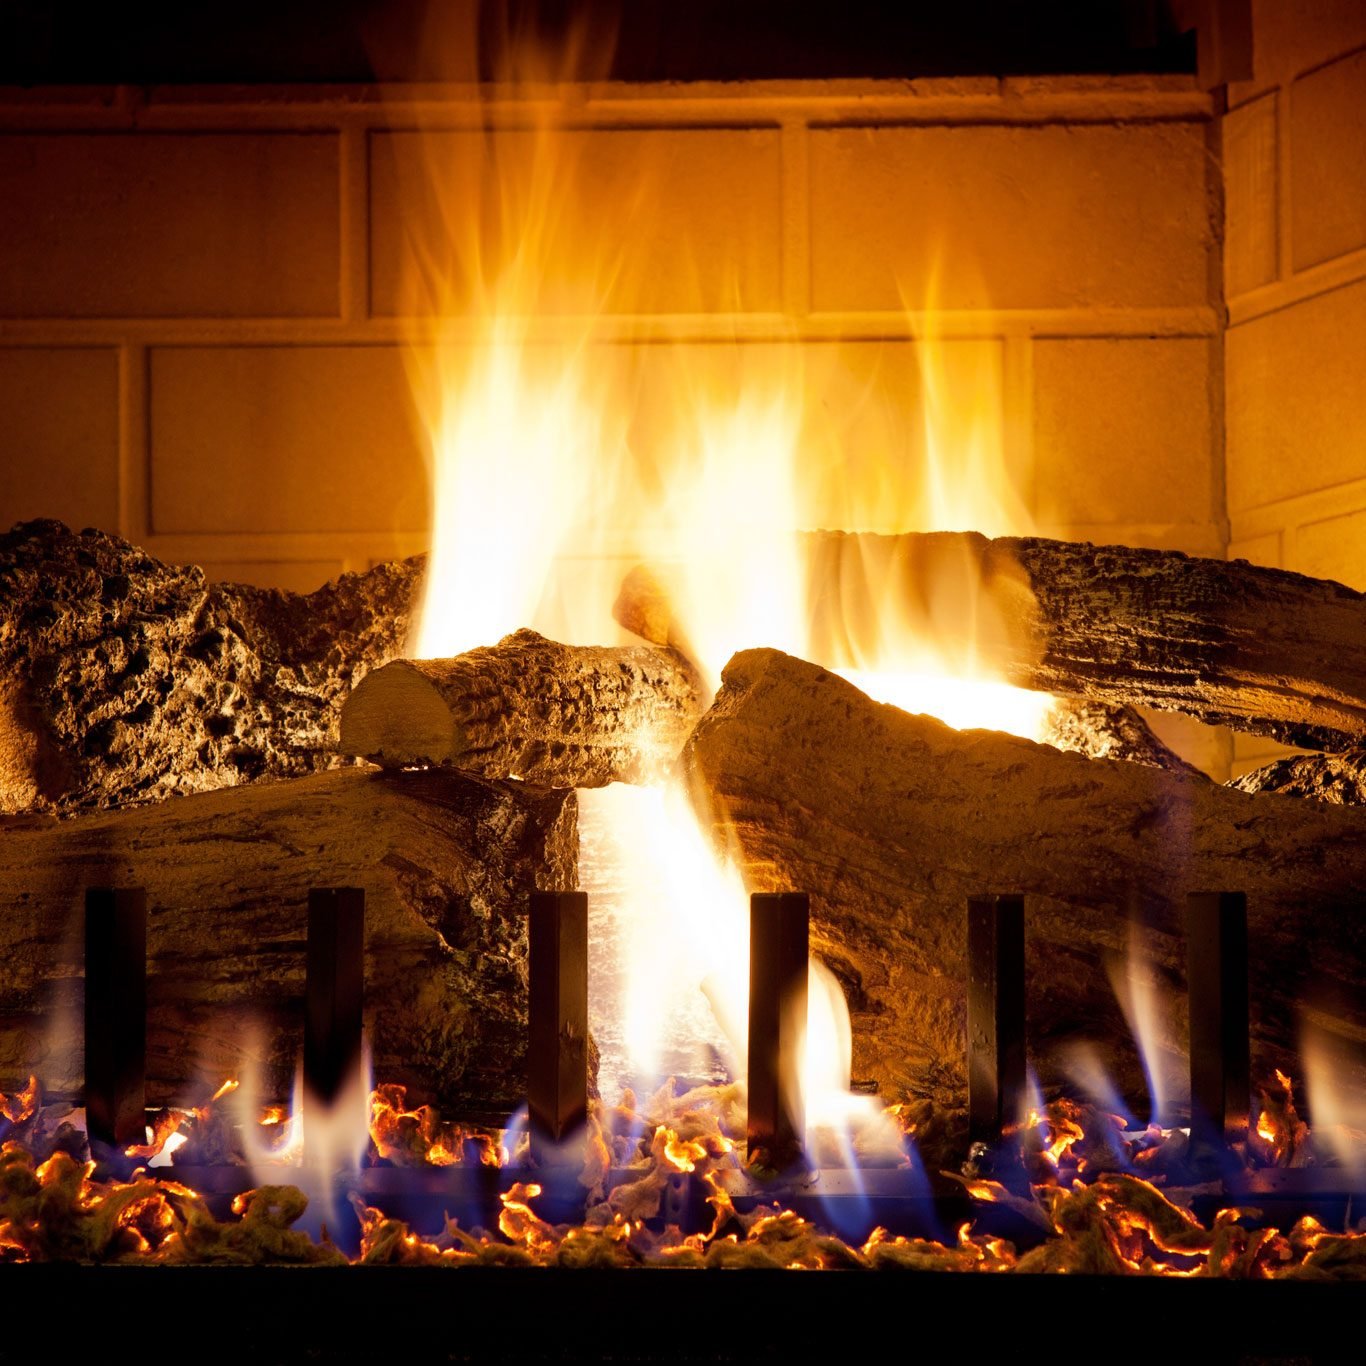 Barrier Screens Mean Safety As Fireplace Interest Heats Up